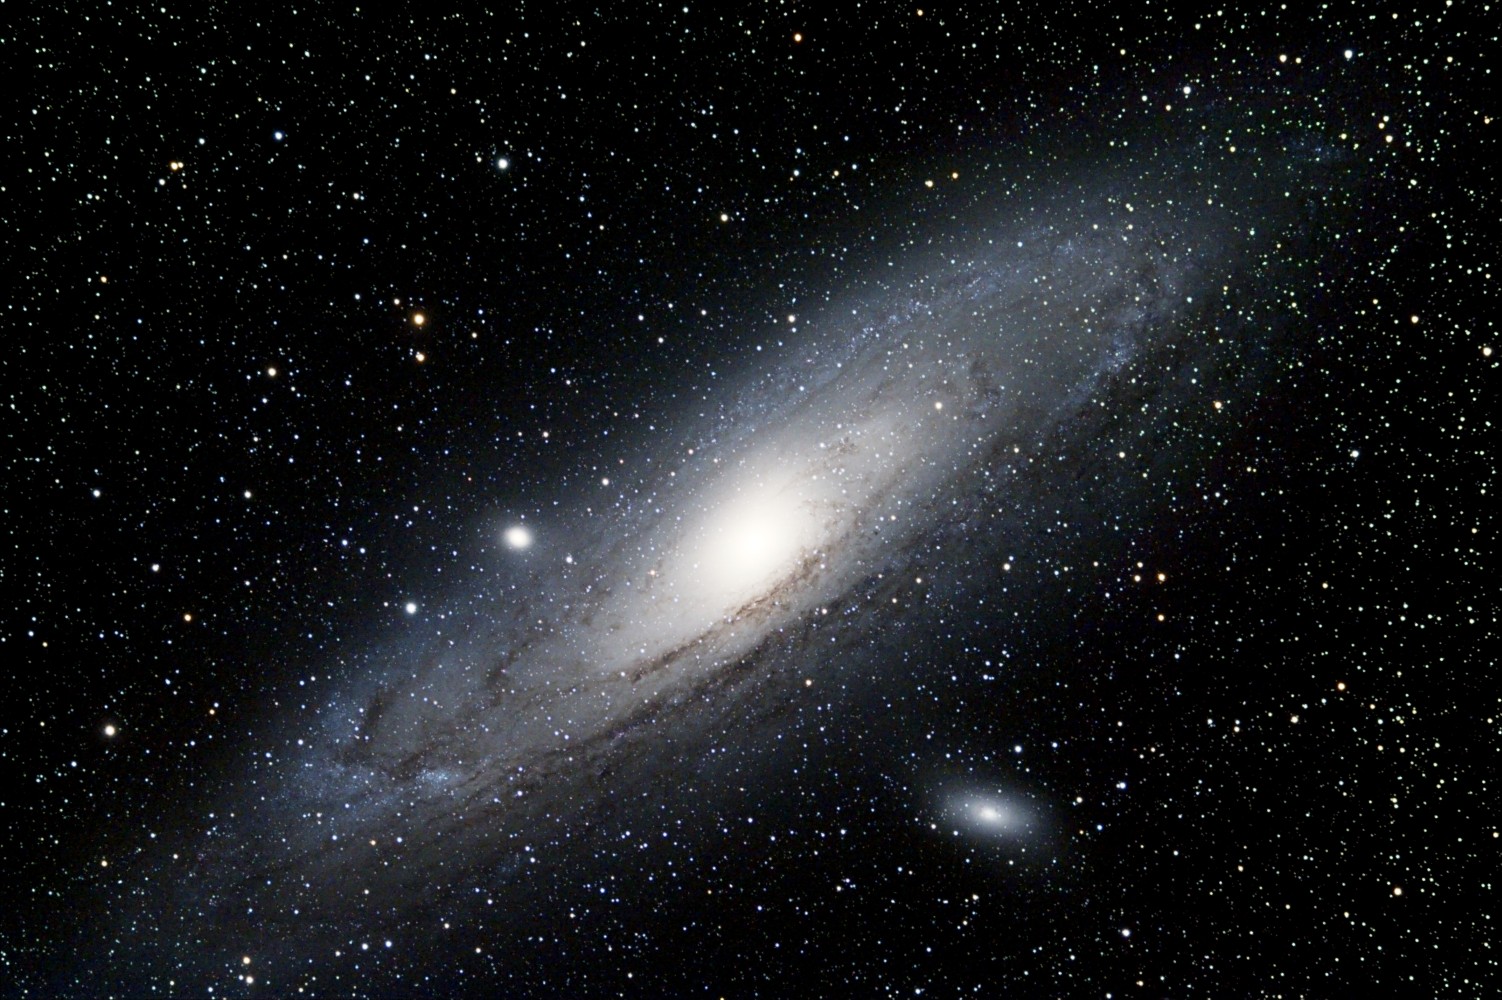 Andromedagalaxie - M31 M 31